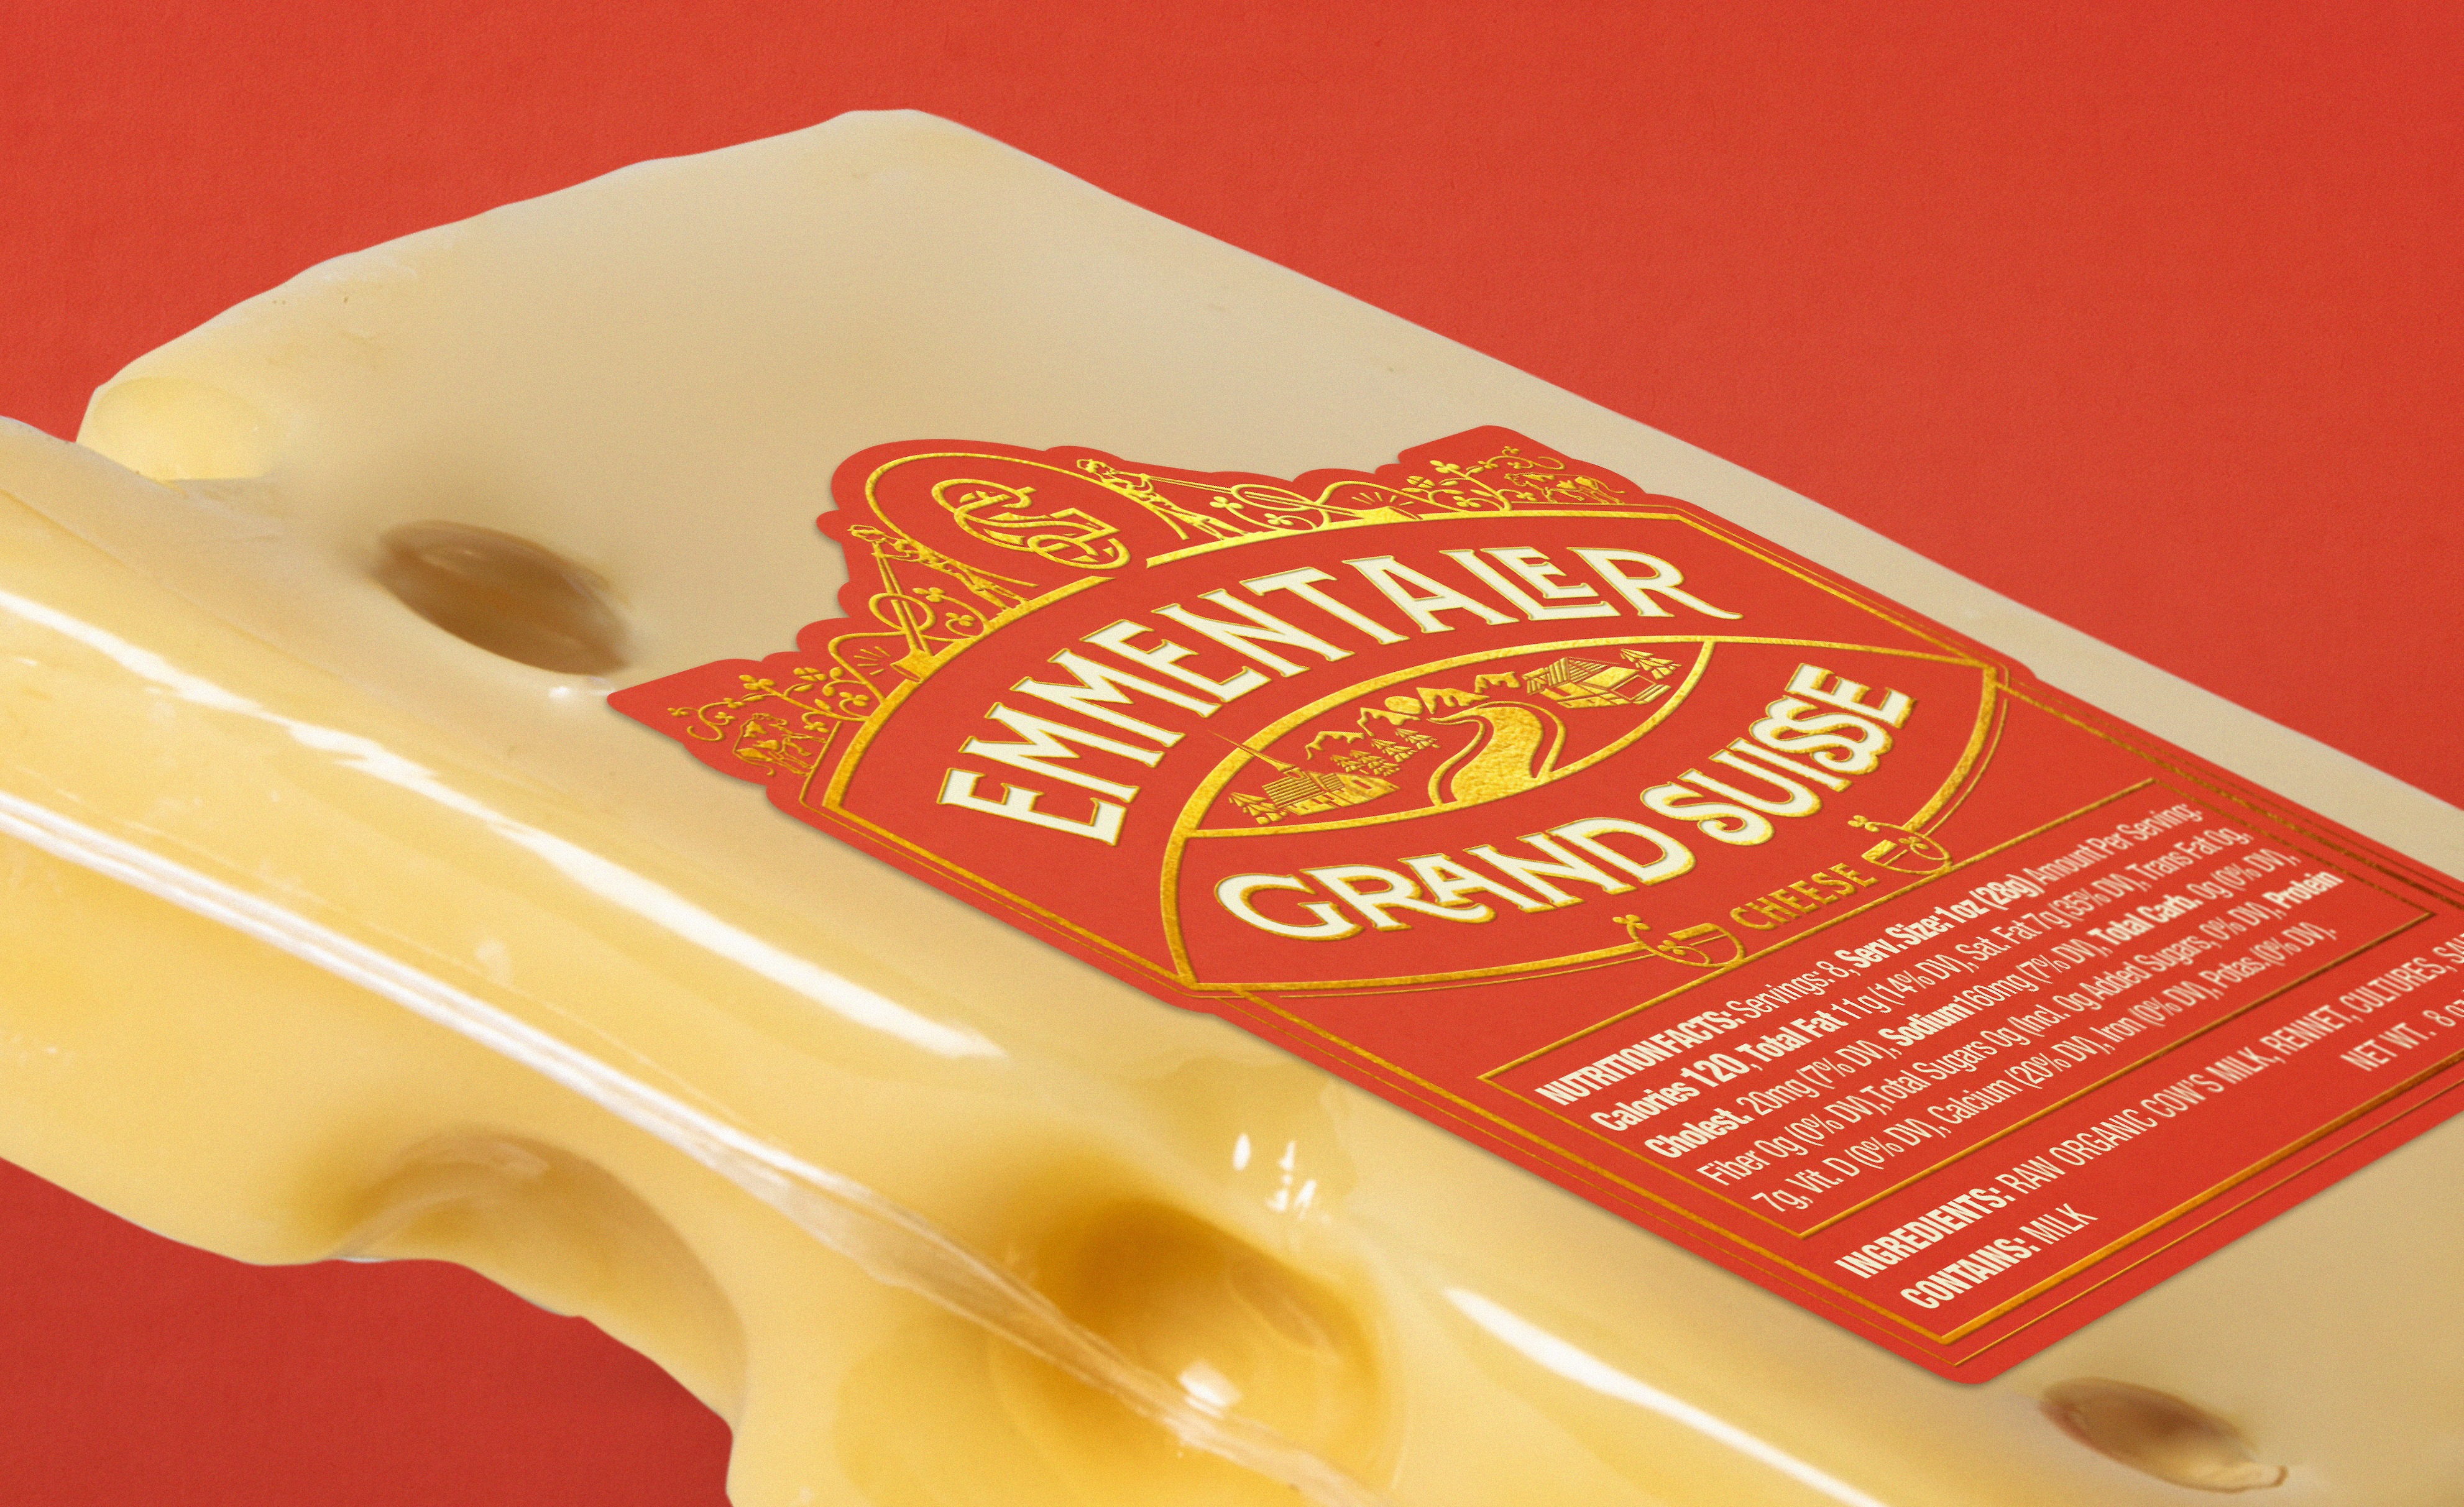 label-cheese-emmentaler-flat-preview-grand-suisse-close-zeki-michael-design-branding-studio-packaging-red copy copy copy